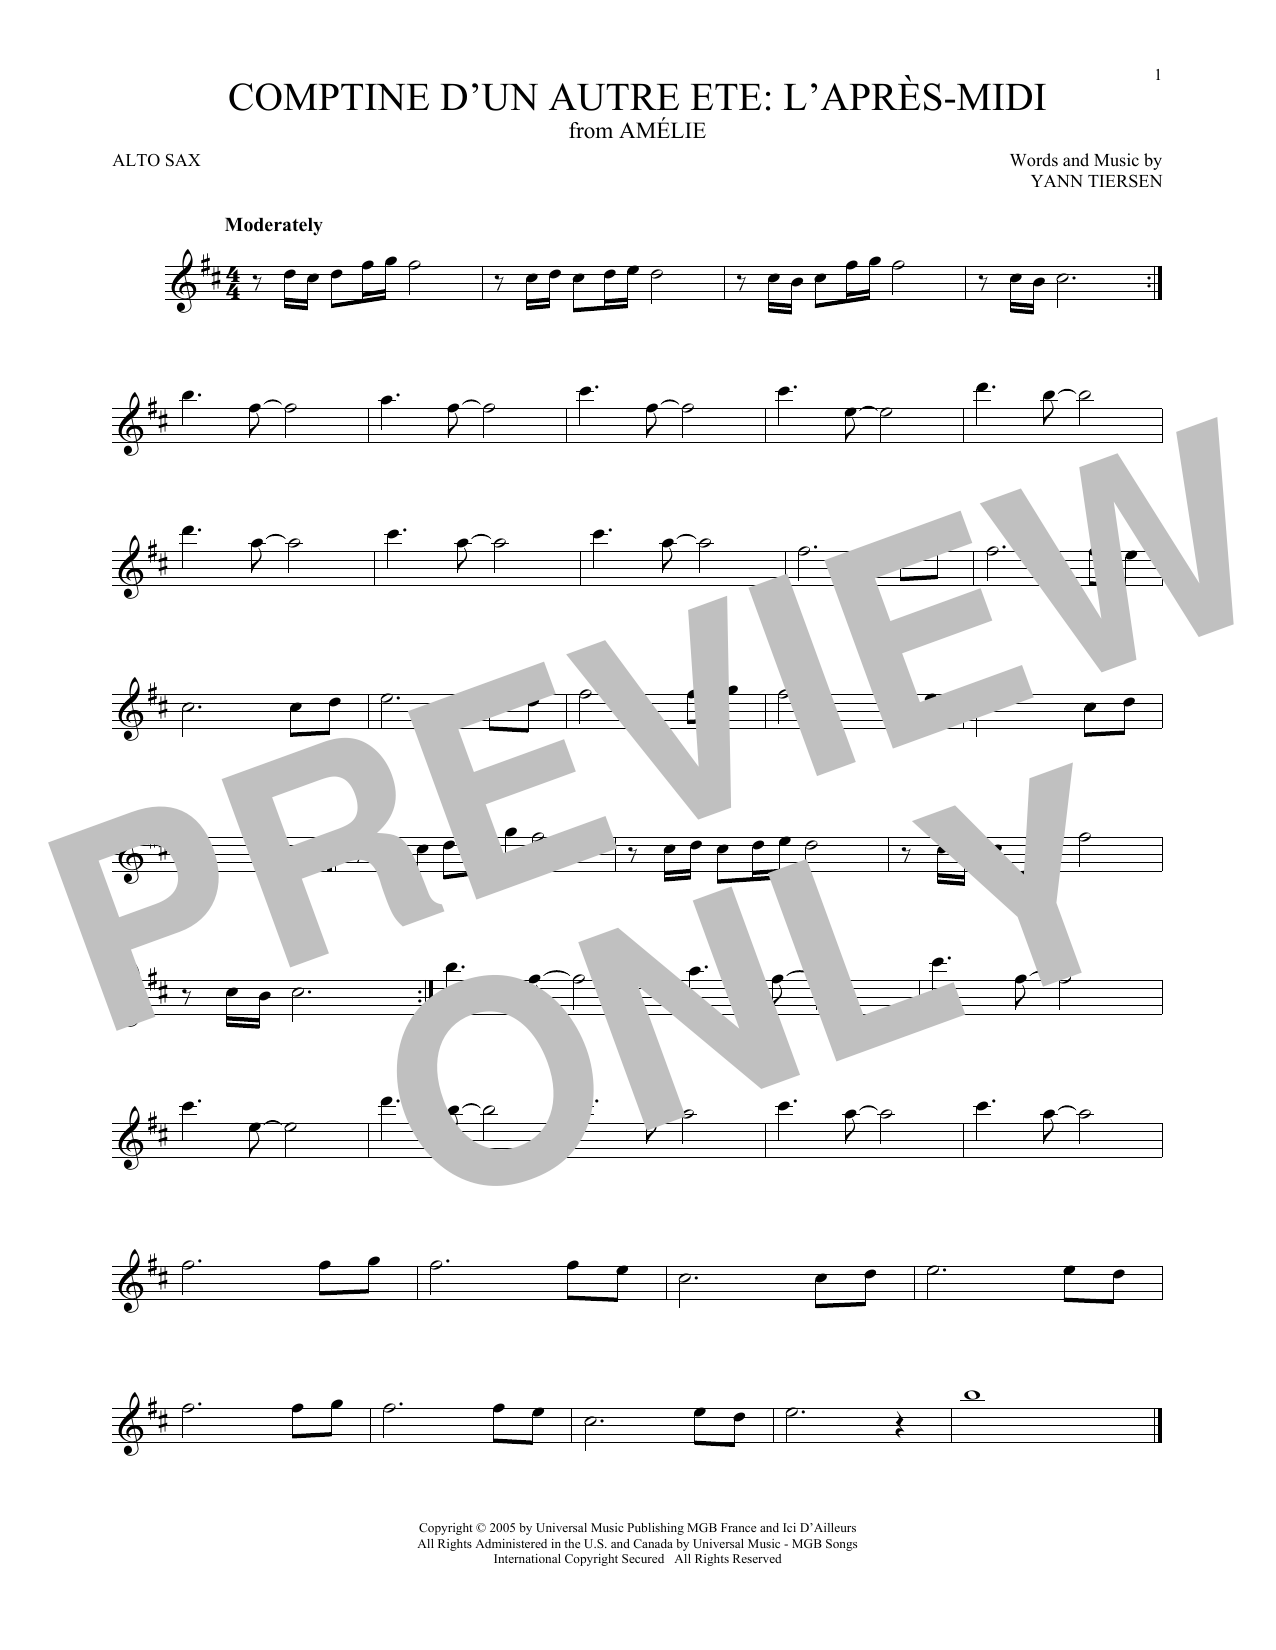 Download Yann Tiersen Comptine d'un autre été: L'après-midi (from Amelie) Sheet Music and learn how to play Clarinet Solo PDF digital score in minutes